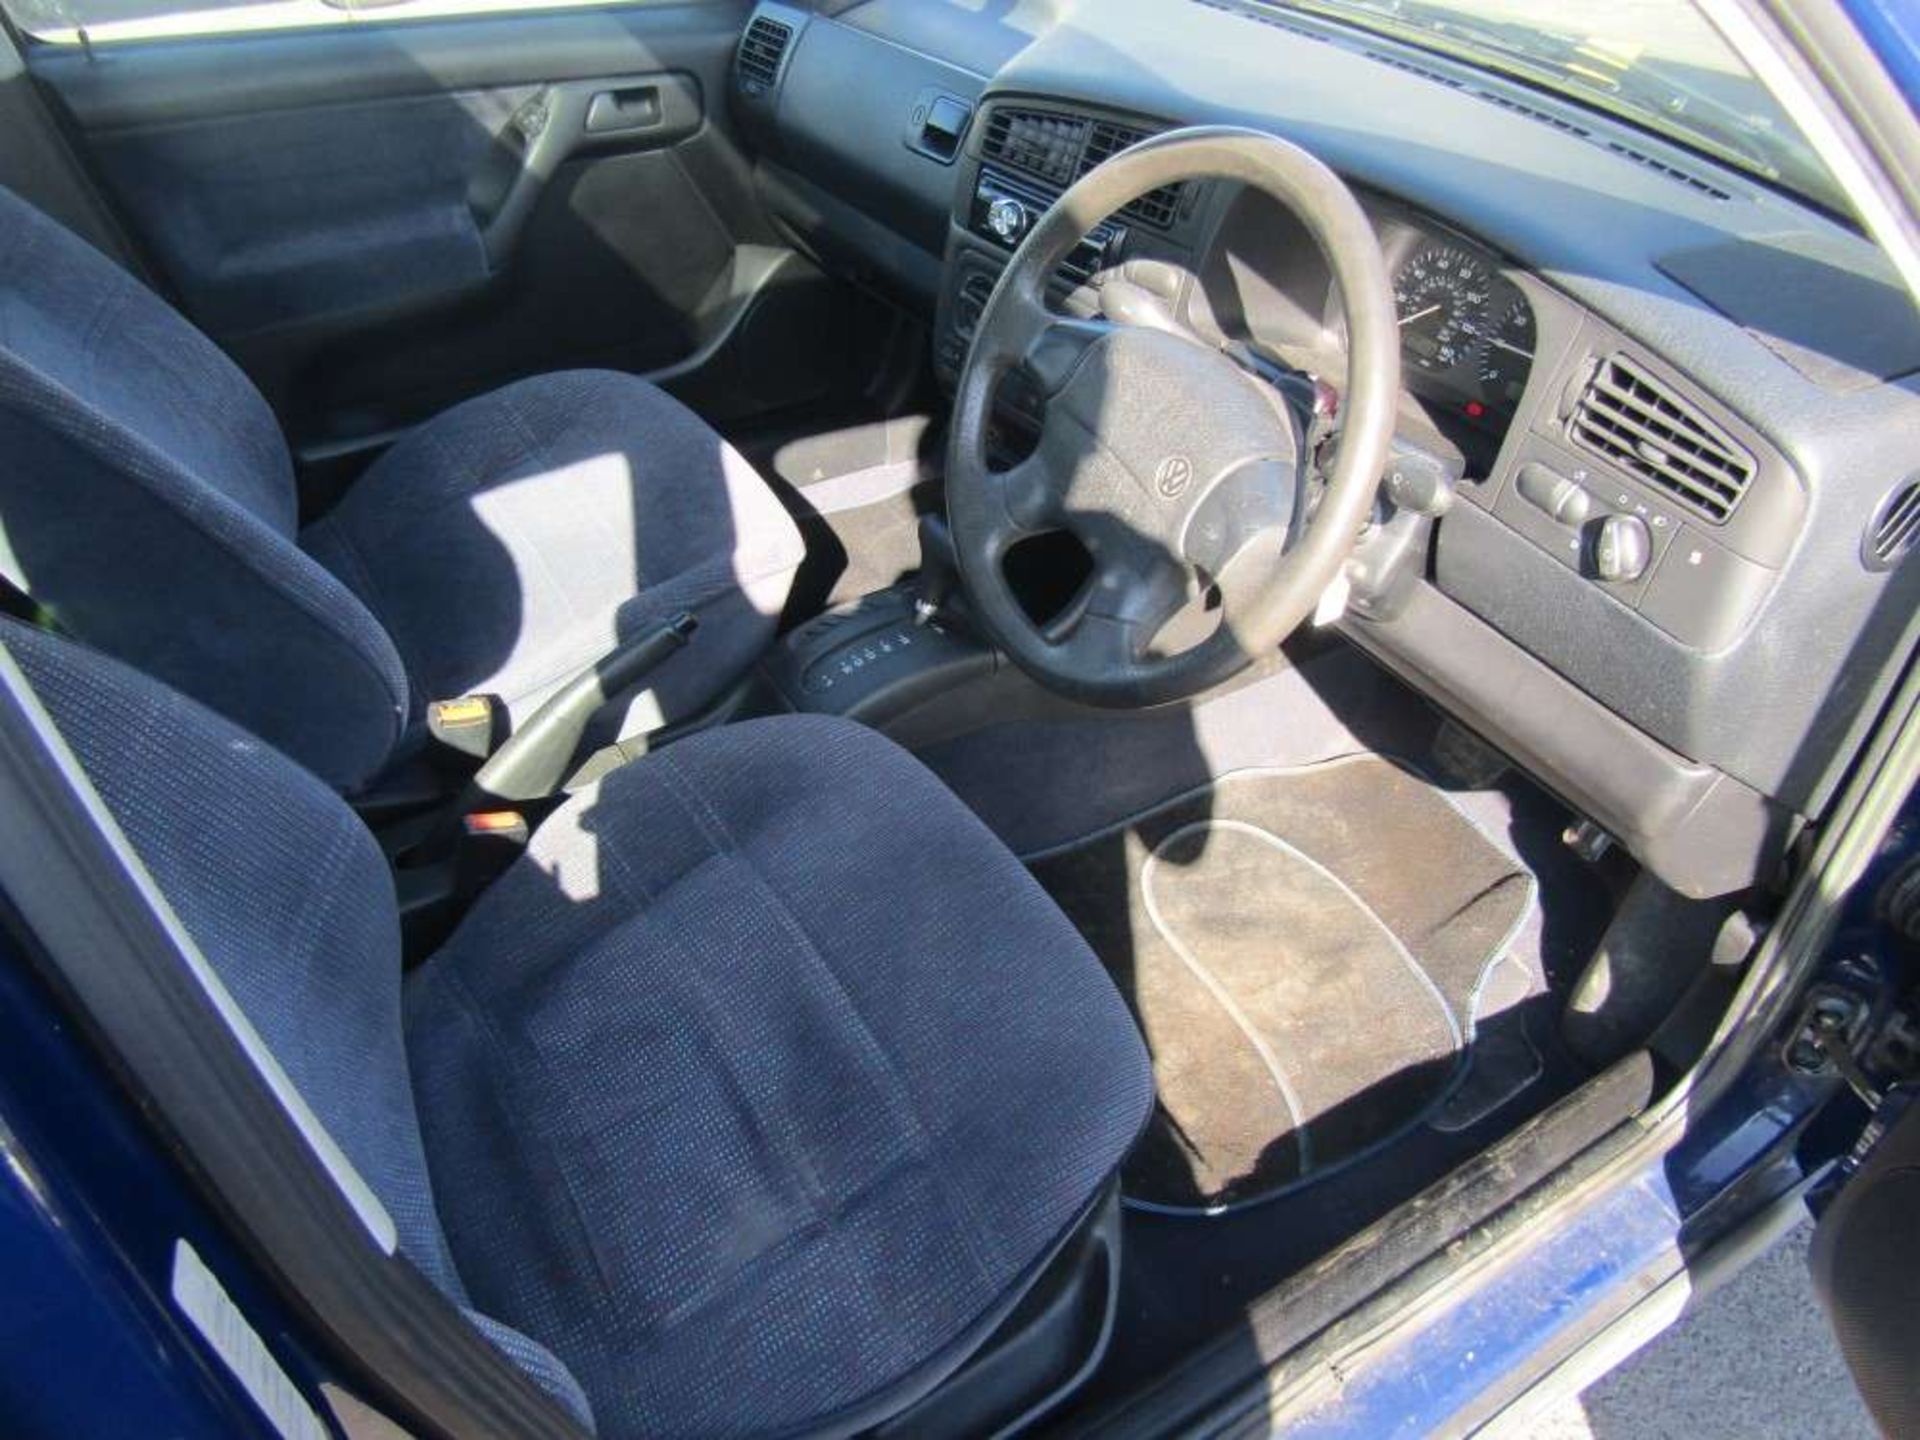 1996 P reg VW Golf GL Auto - Image 5 of 6